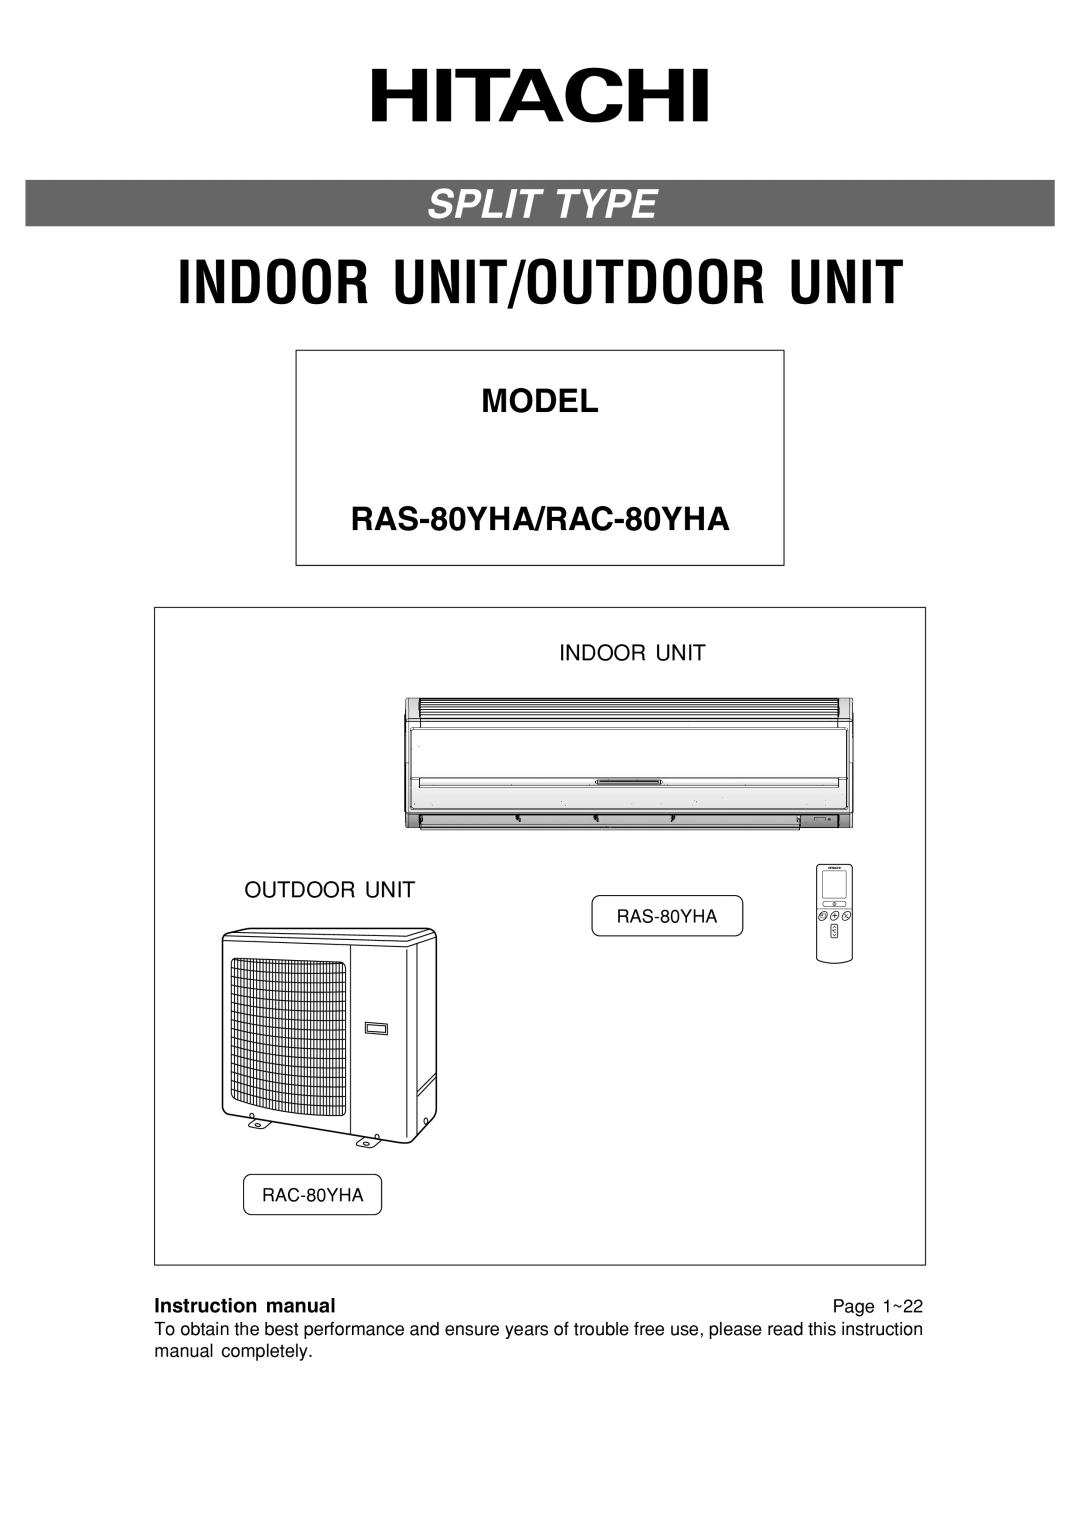 Hitachi instruction manual Indoor Unit/Outdoor Unit, Split Type, MODEL RAS-80YHA/RAC-80YHA 